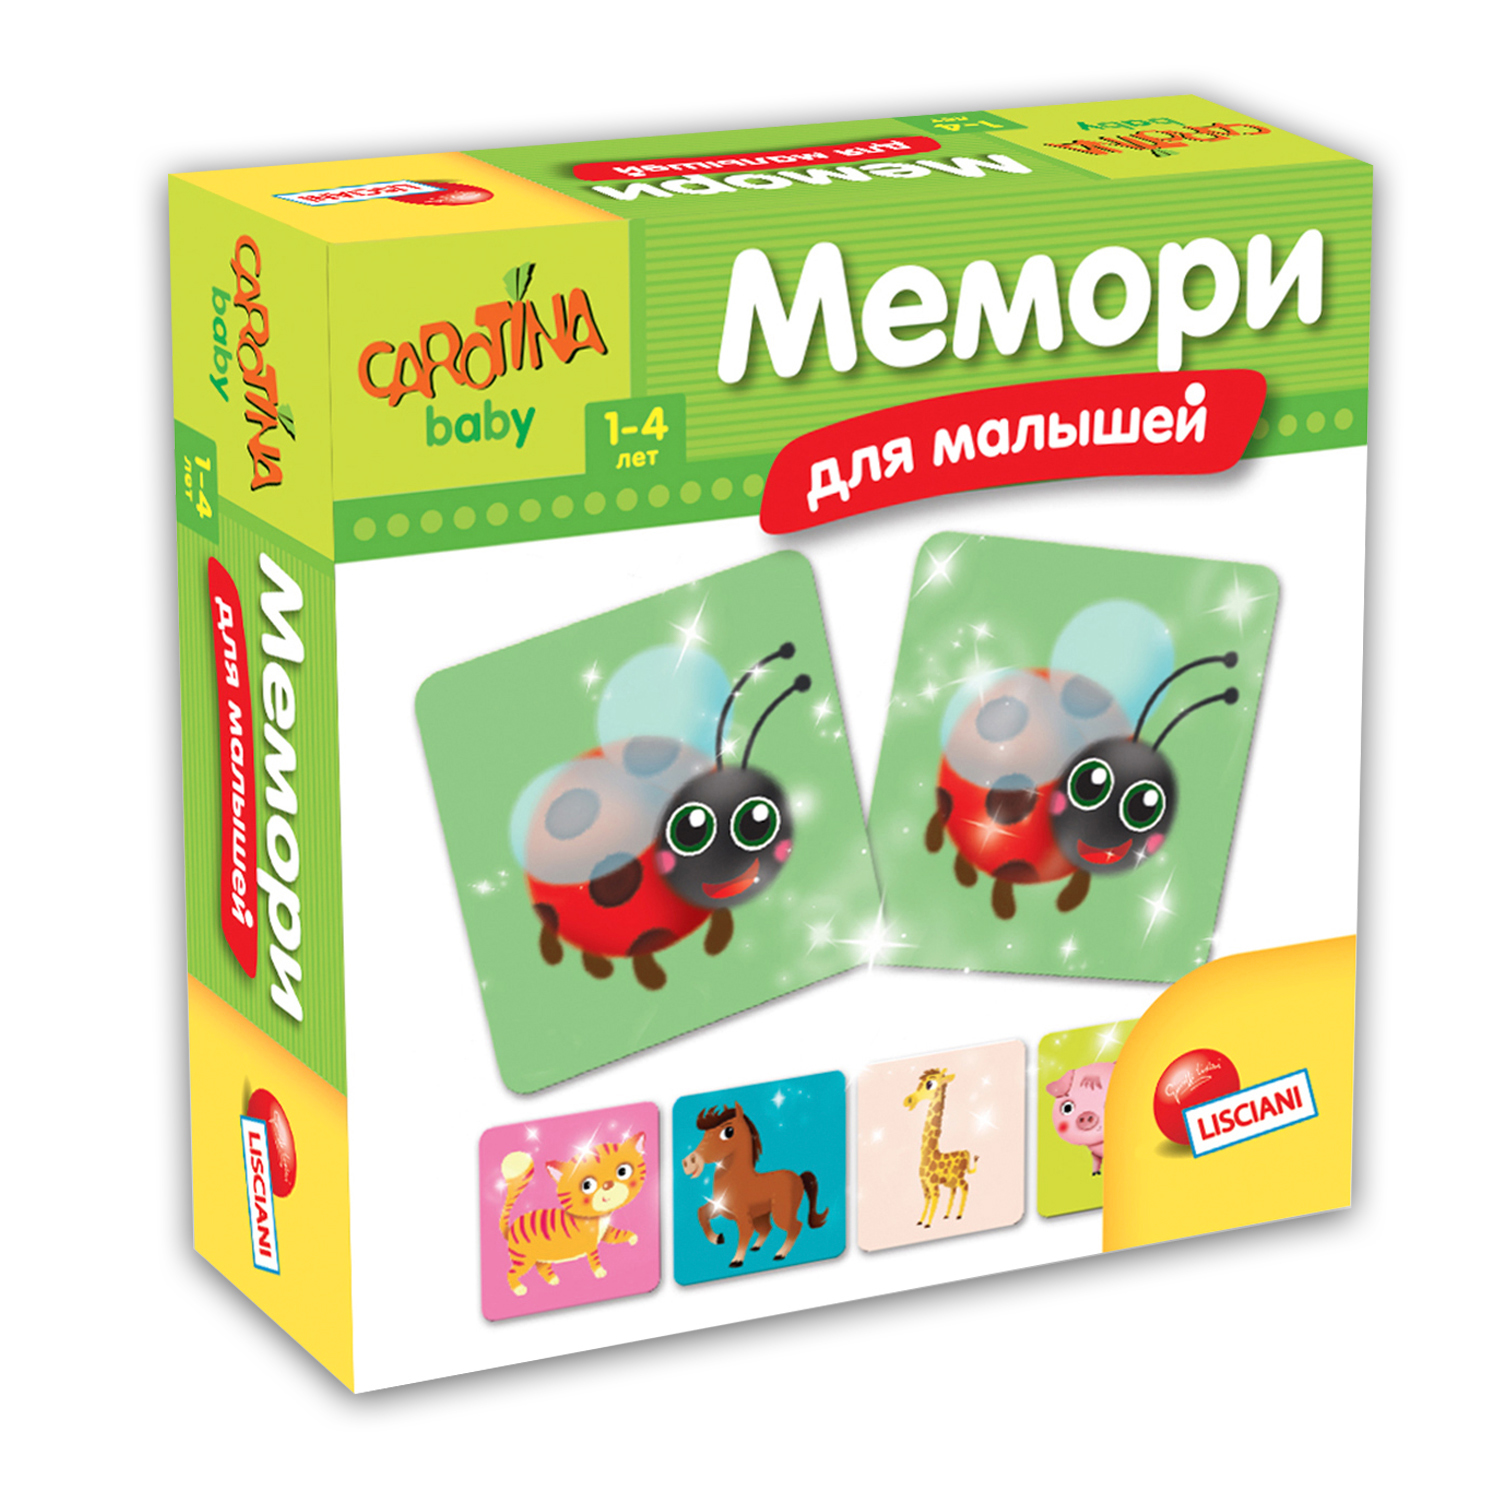 Меморитаб. Игра Мемори. Детская игра «Мемори». Обучающая игра Lisciani Мемори для малышей. Карточки Мемори для детей Мемо.